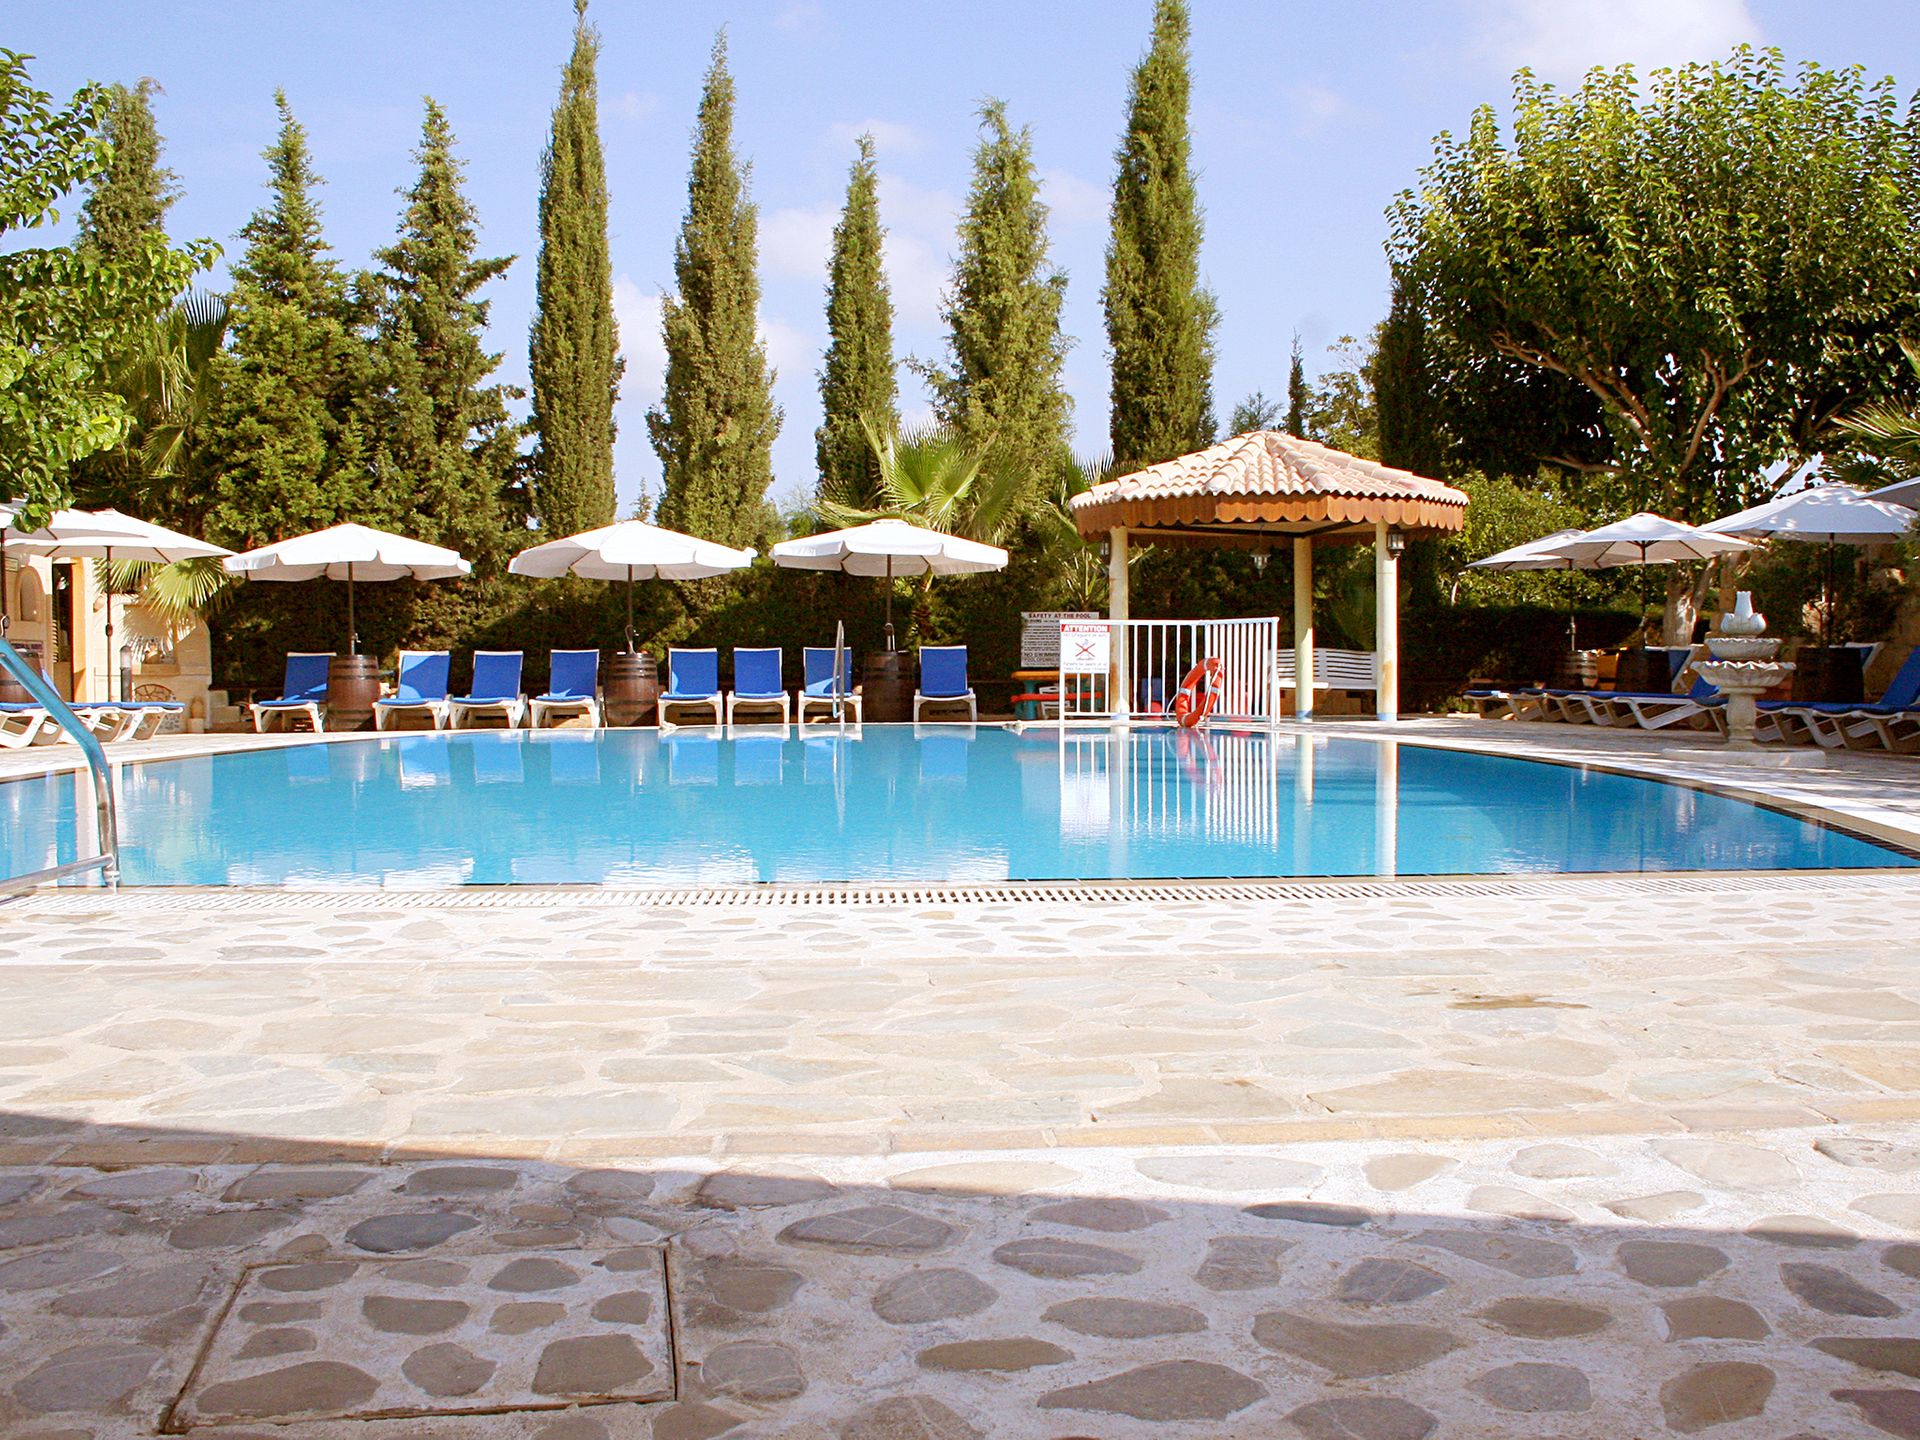 Apollonia Holiday Apartments - Πάφος, Κύπρος ✦ 4 Ημέρες (3 Διανυκτερεύσεις) ✦ 2 άτομα ✦ 1 ✦ έως 31/03/2022 ✦ Μοναδική Τοποθεσία!